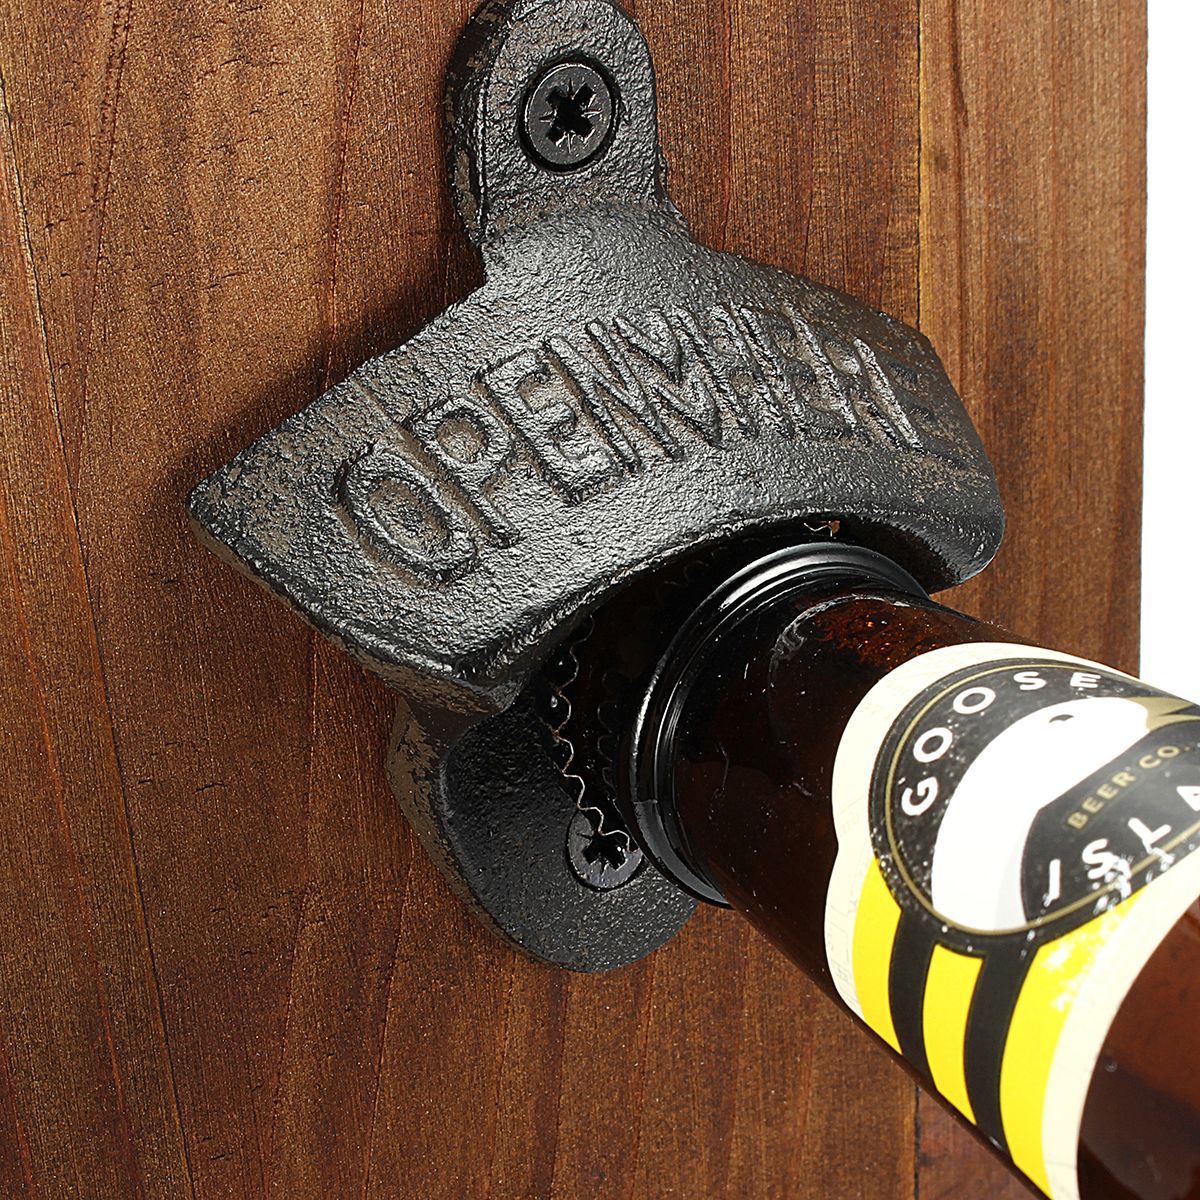 Beer-Bottle-Opener-Drink-Cap-Catcher-Wooden-Iron-Wall-Mounted-Rustic-Bar-Decoration-1368375